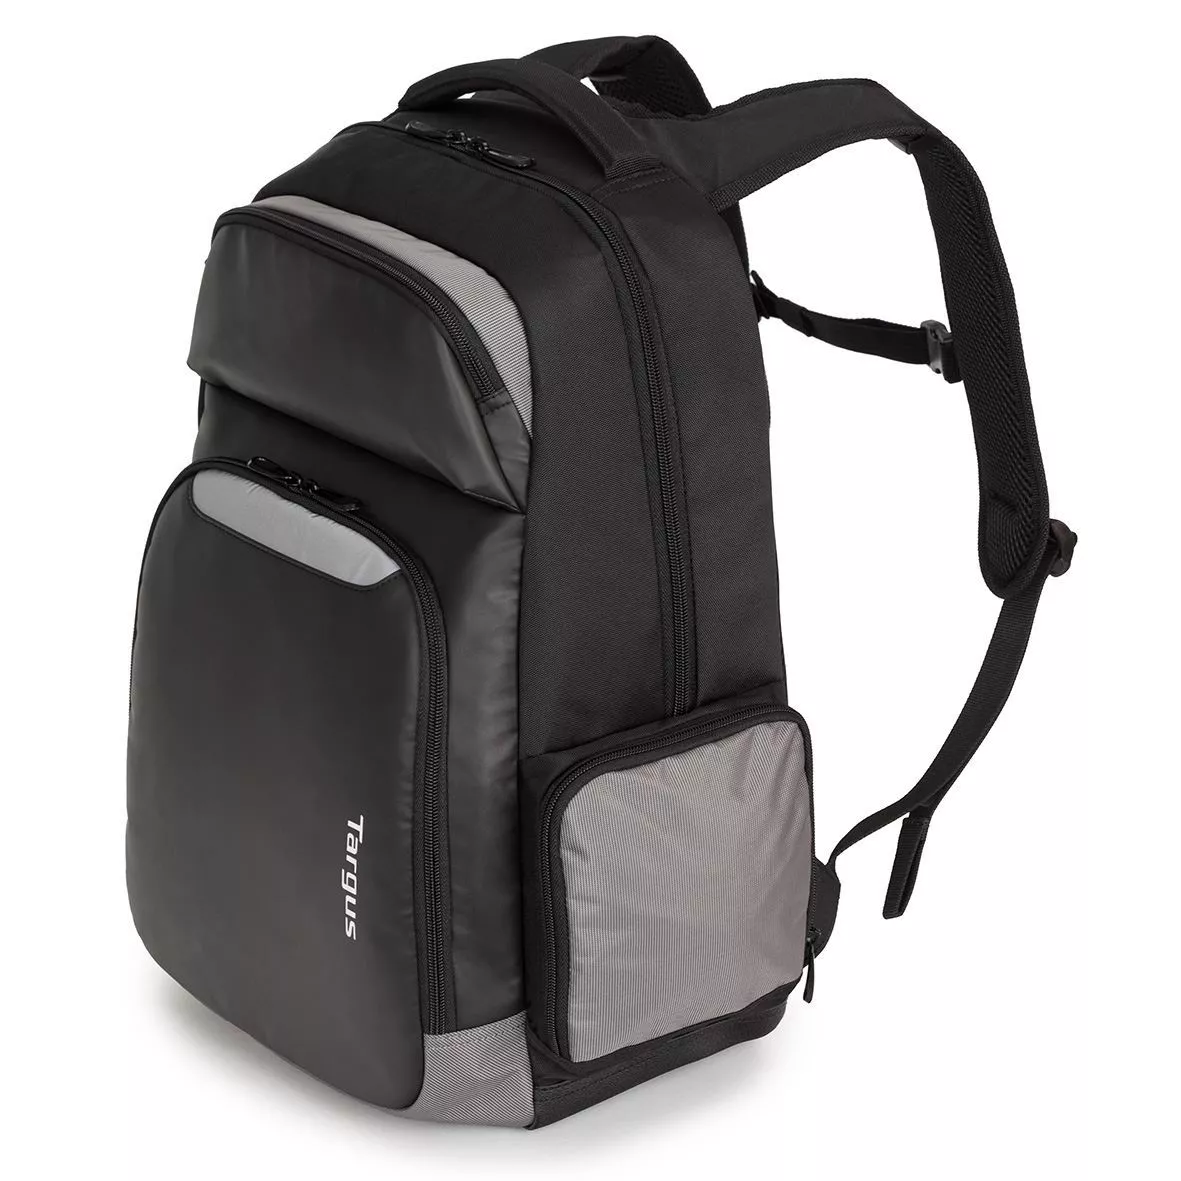 Revendeur officiel TARGUS Education 15.6inch Backpack